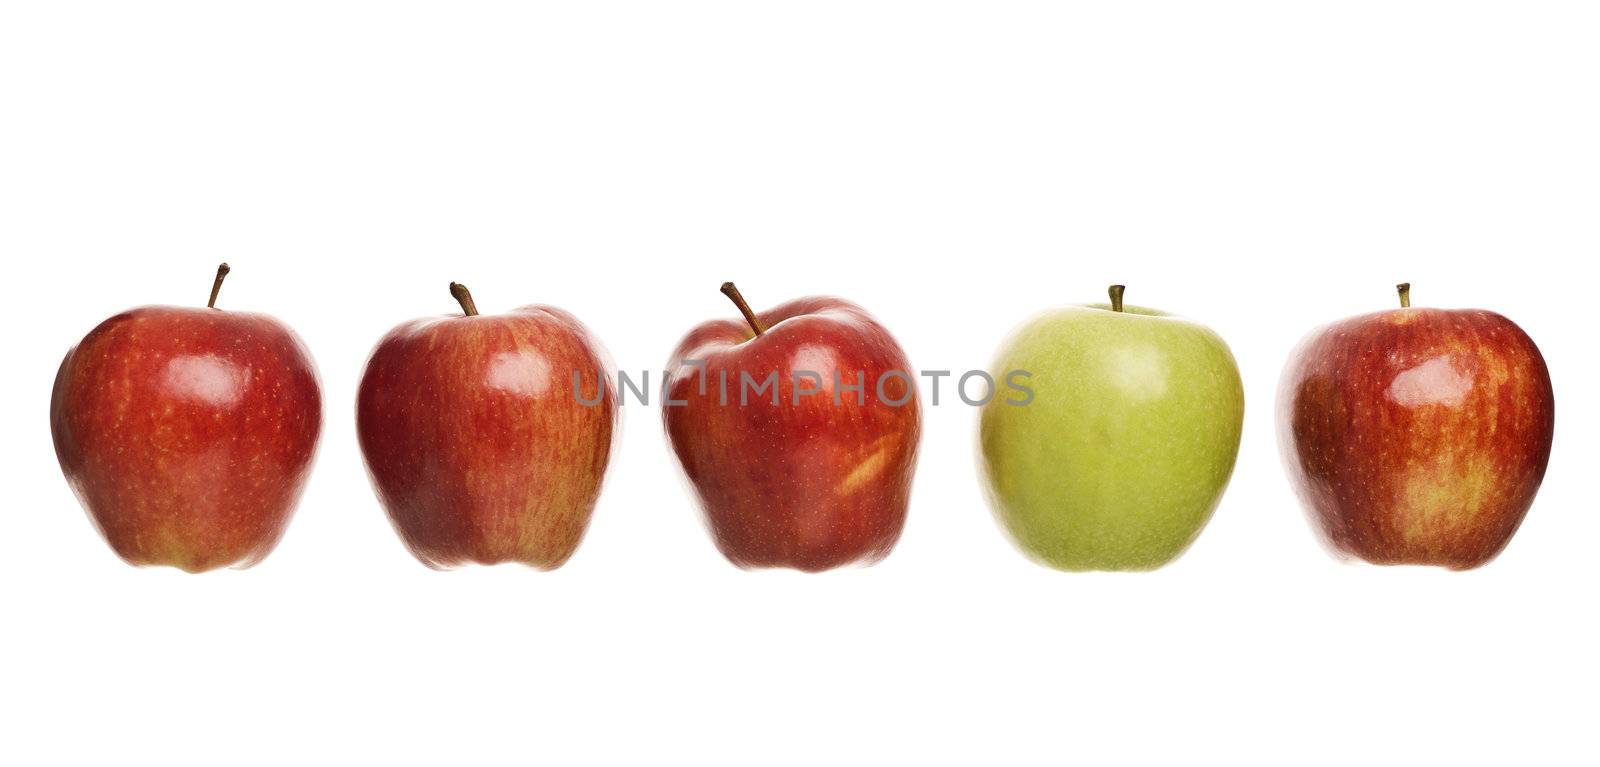 Group of apples by gemenacom